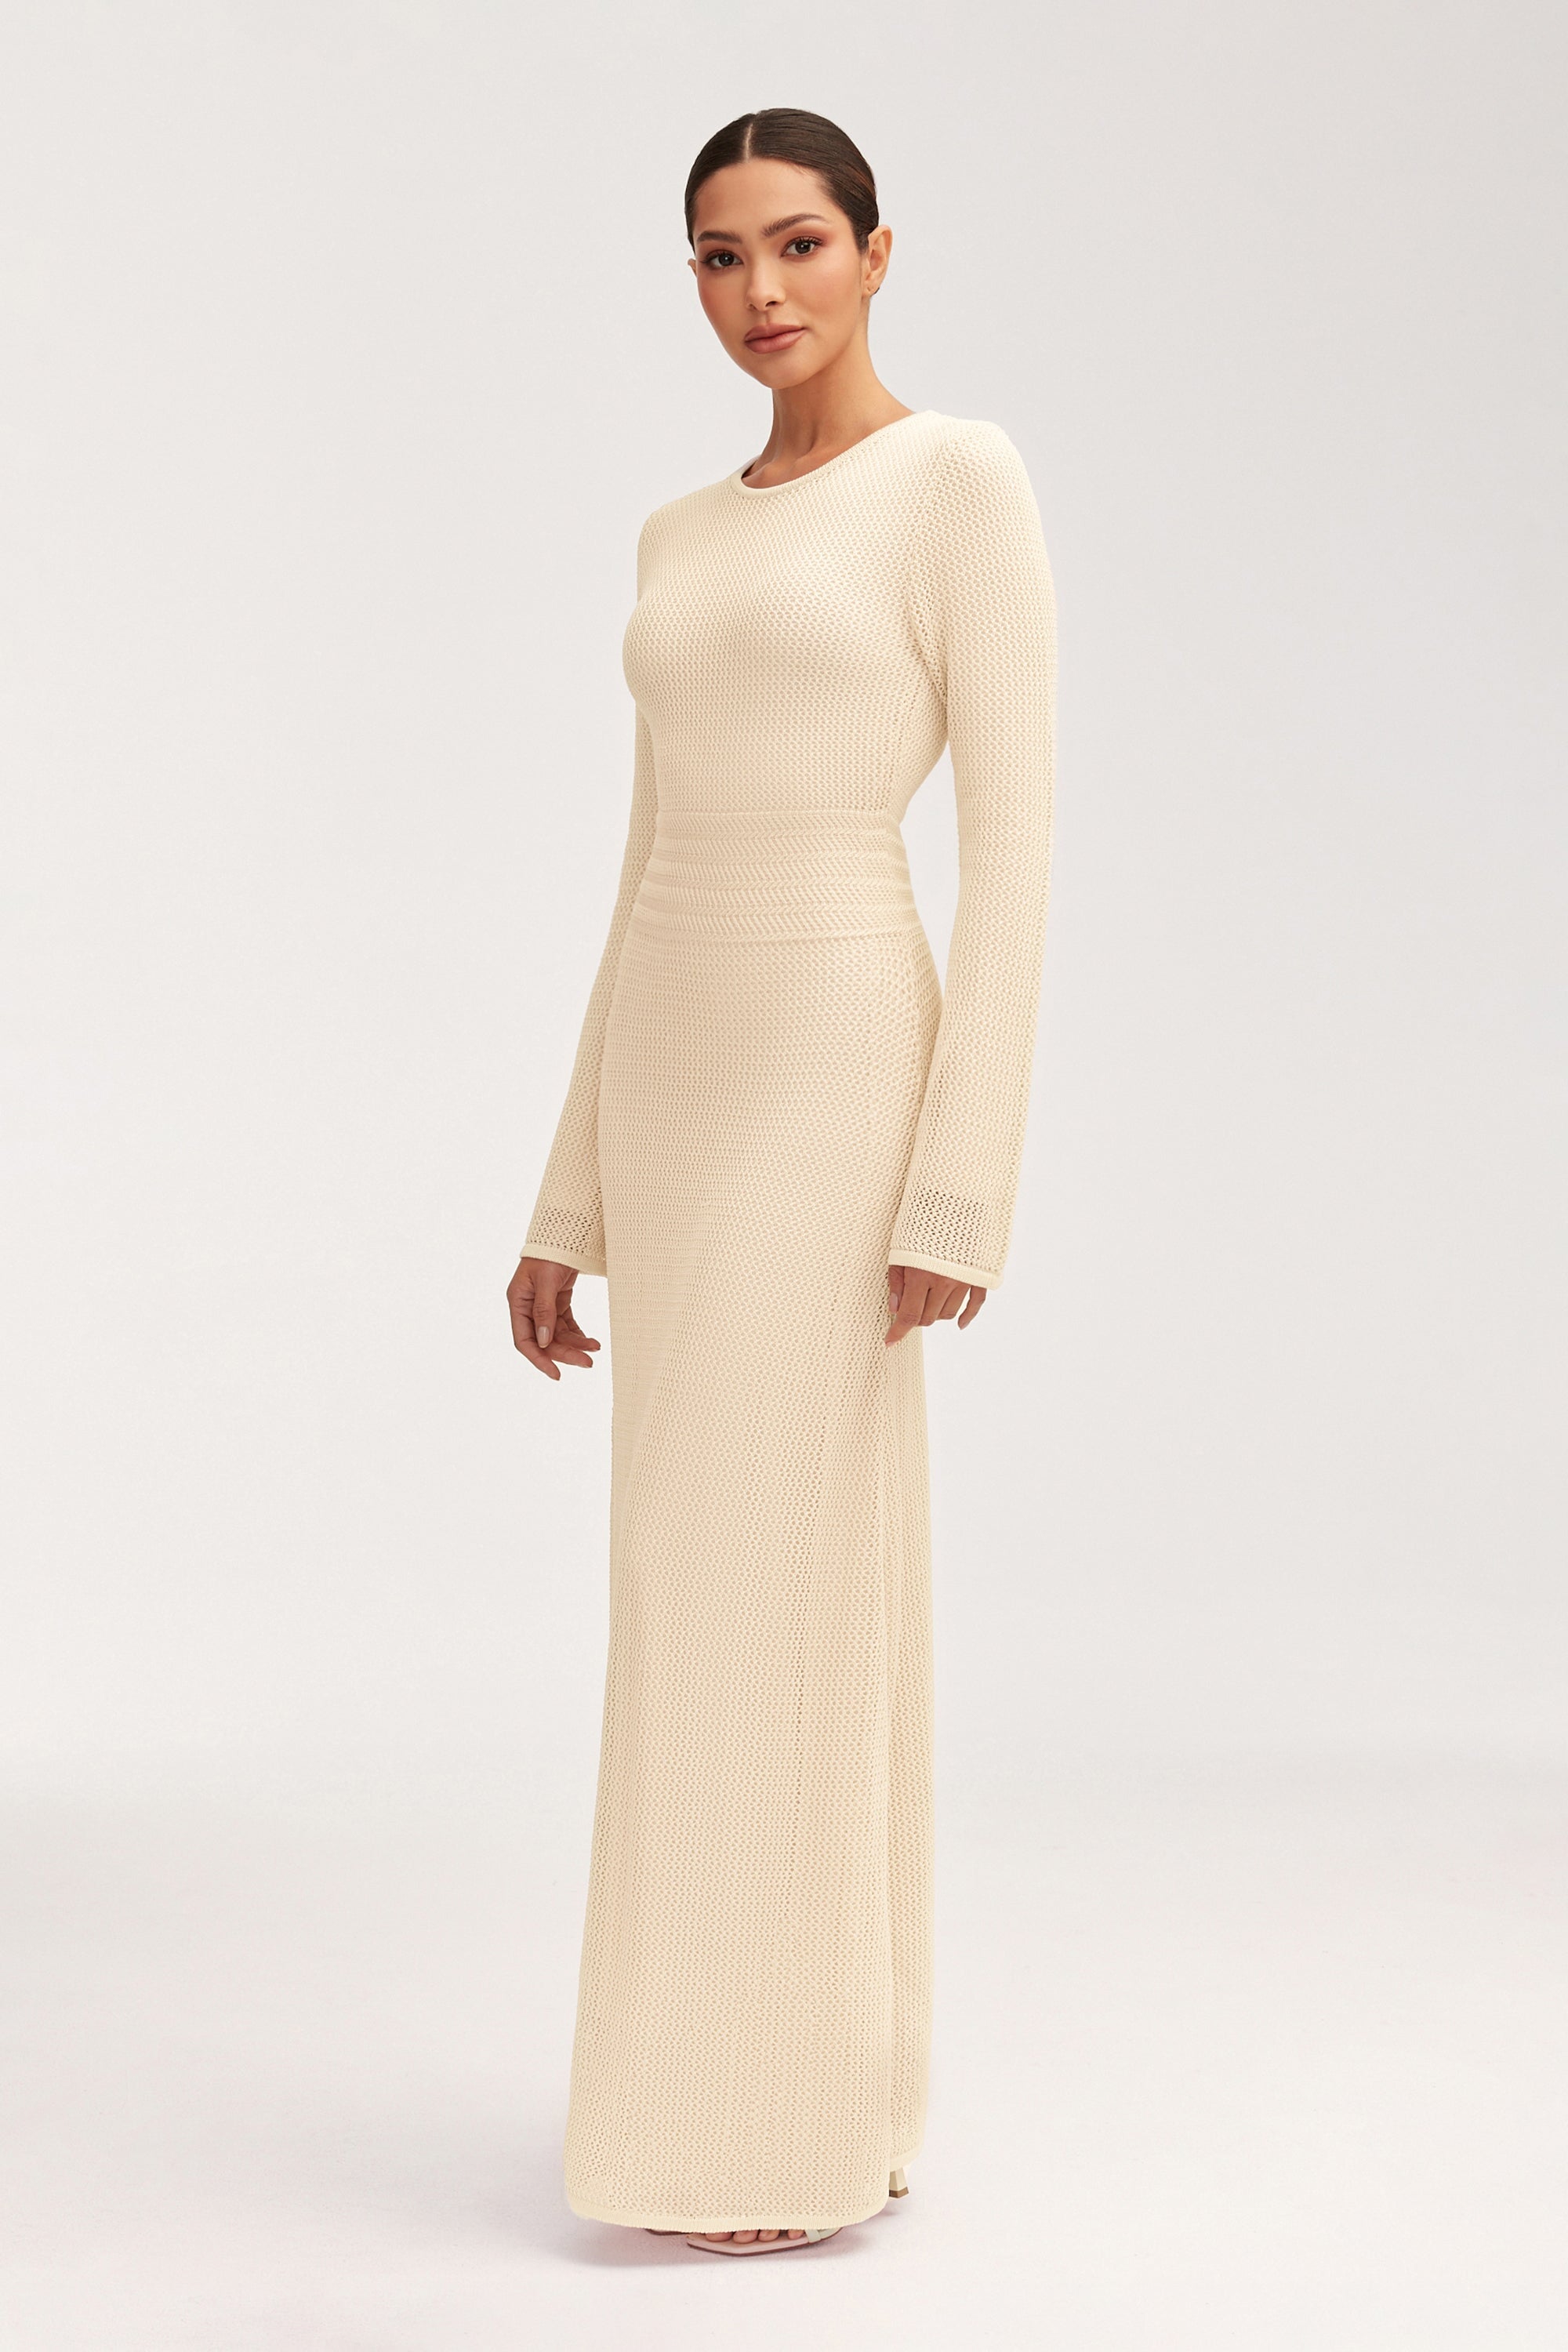 Rachel Crochet Maxi Dress - Off White Clothing Veiled 